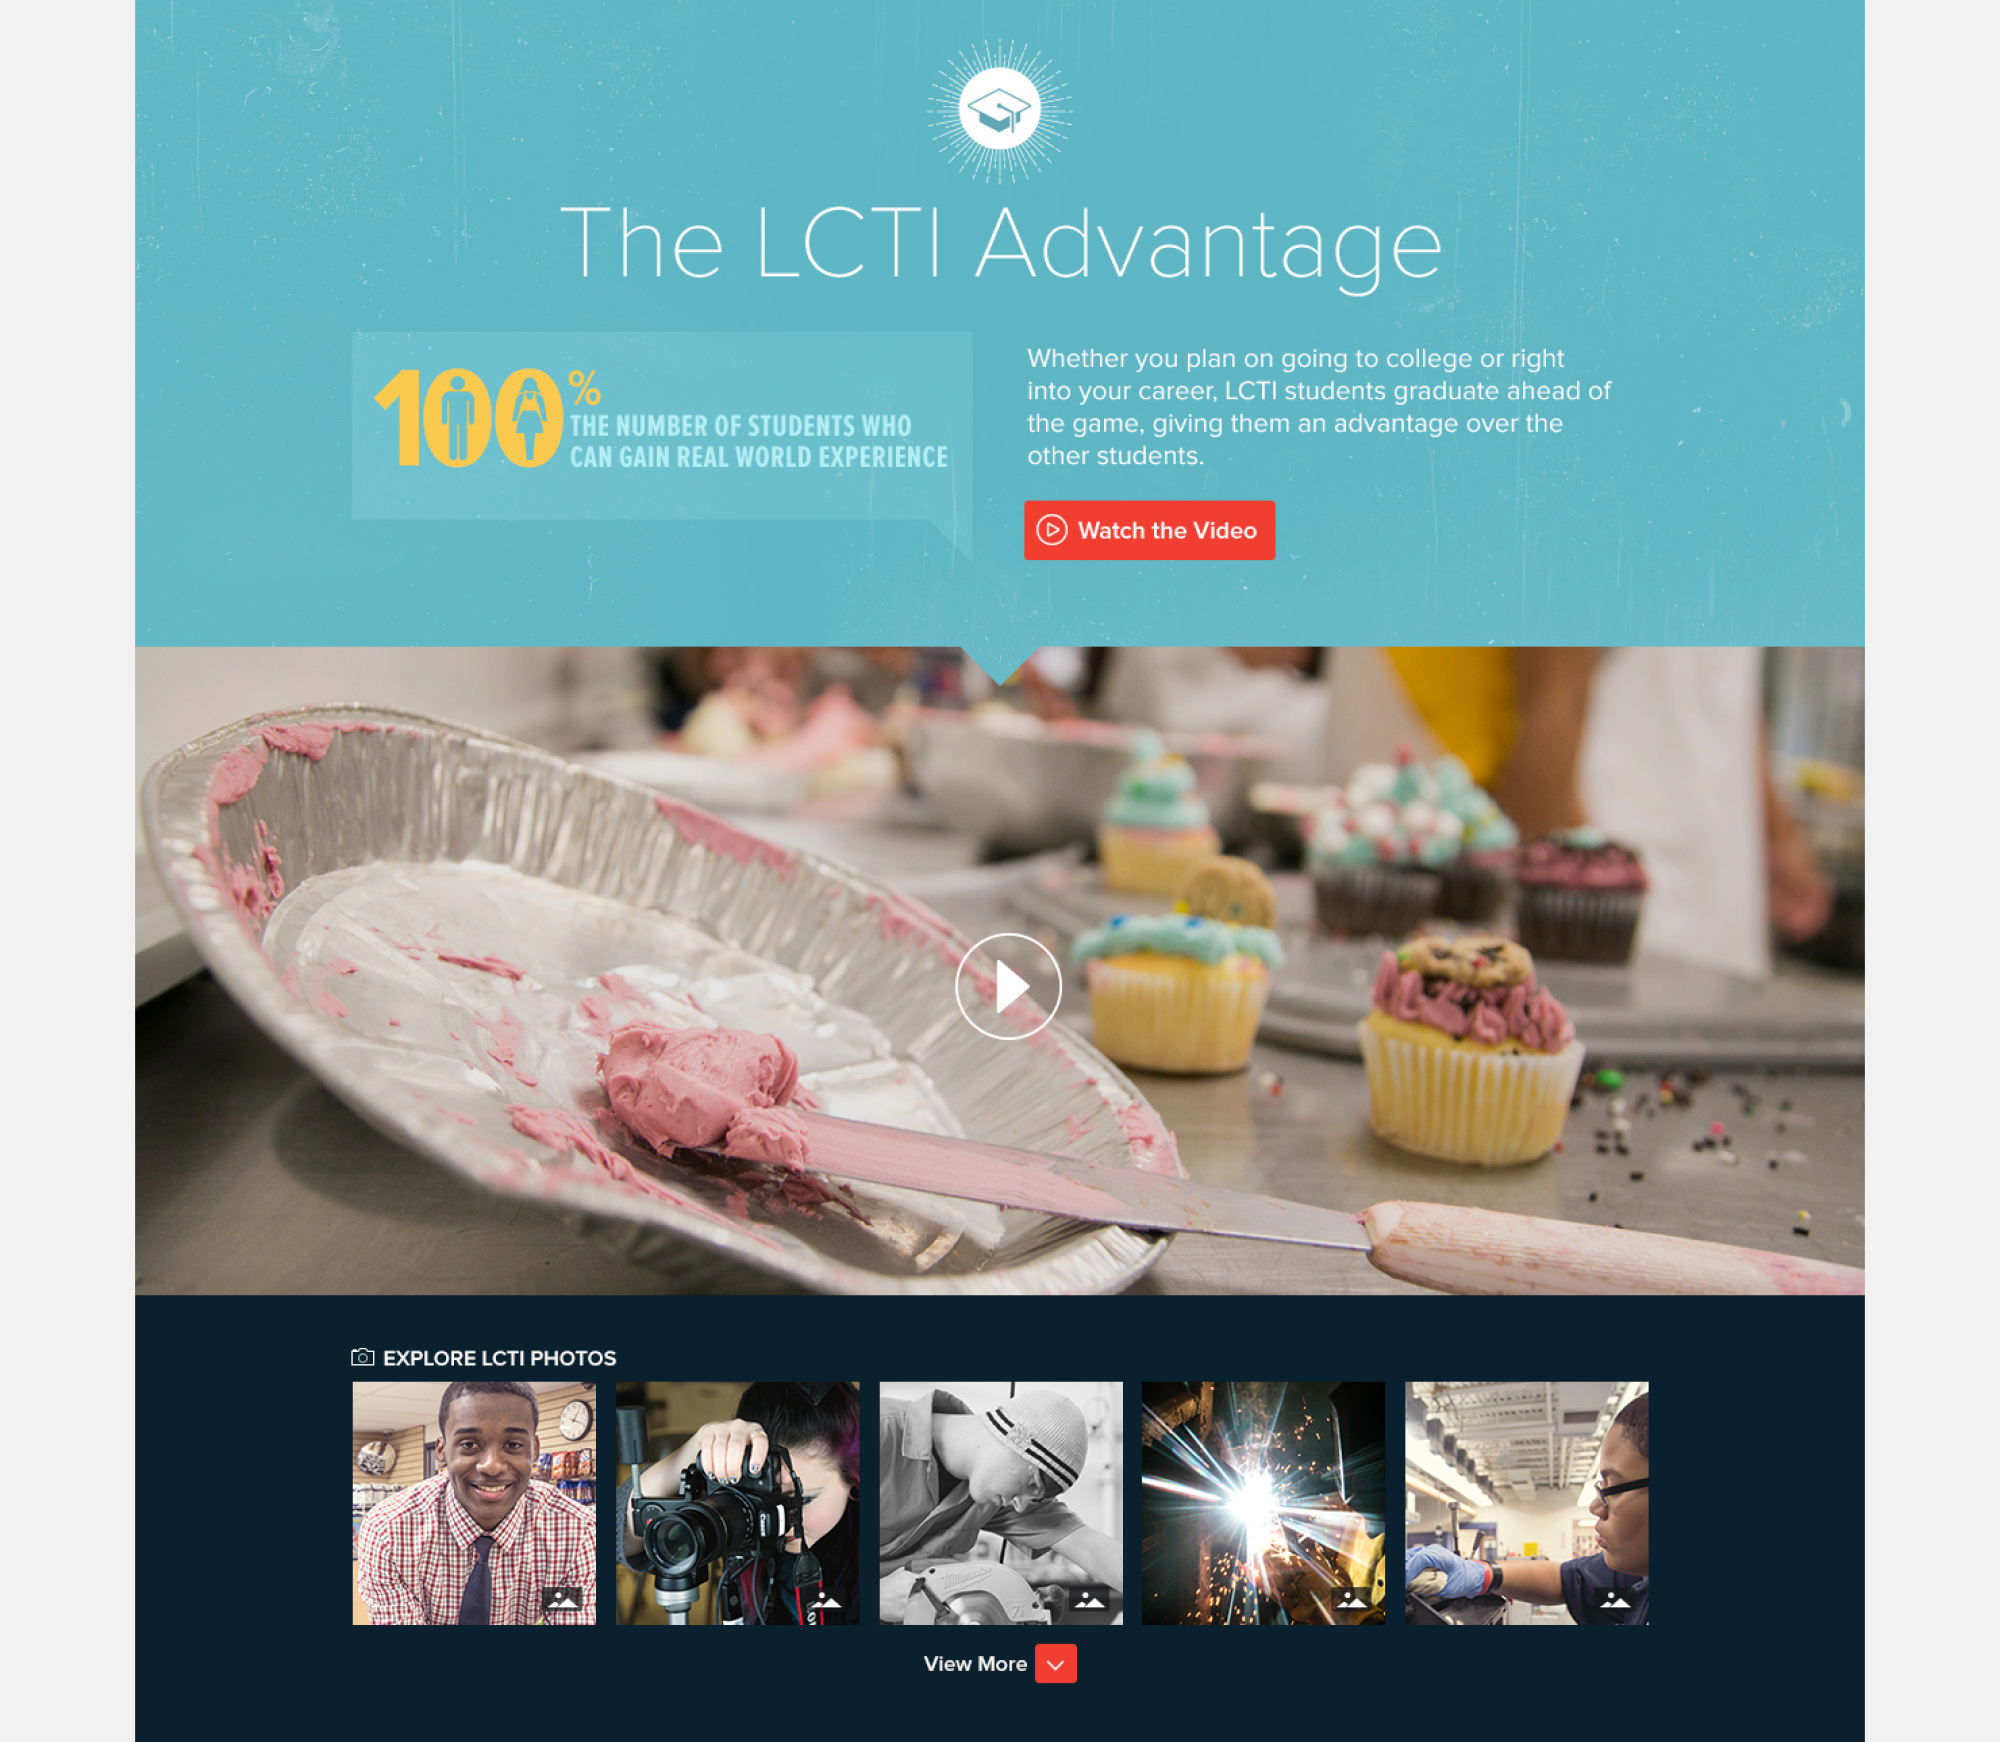 LCTI Website designs